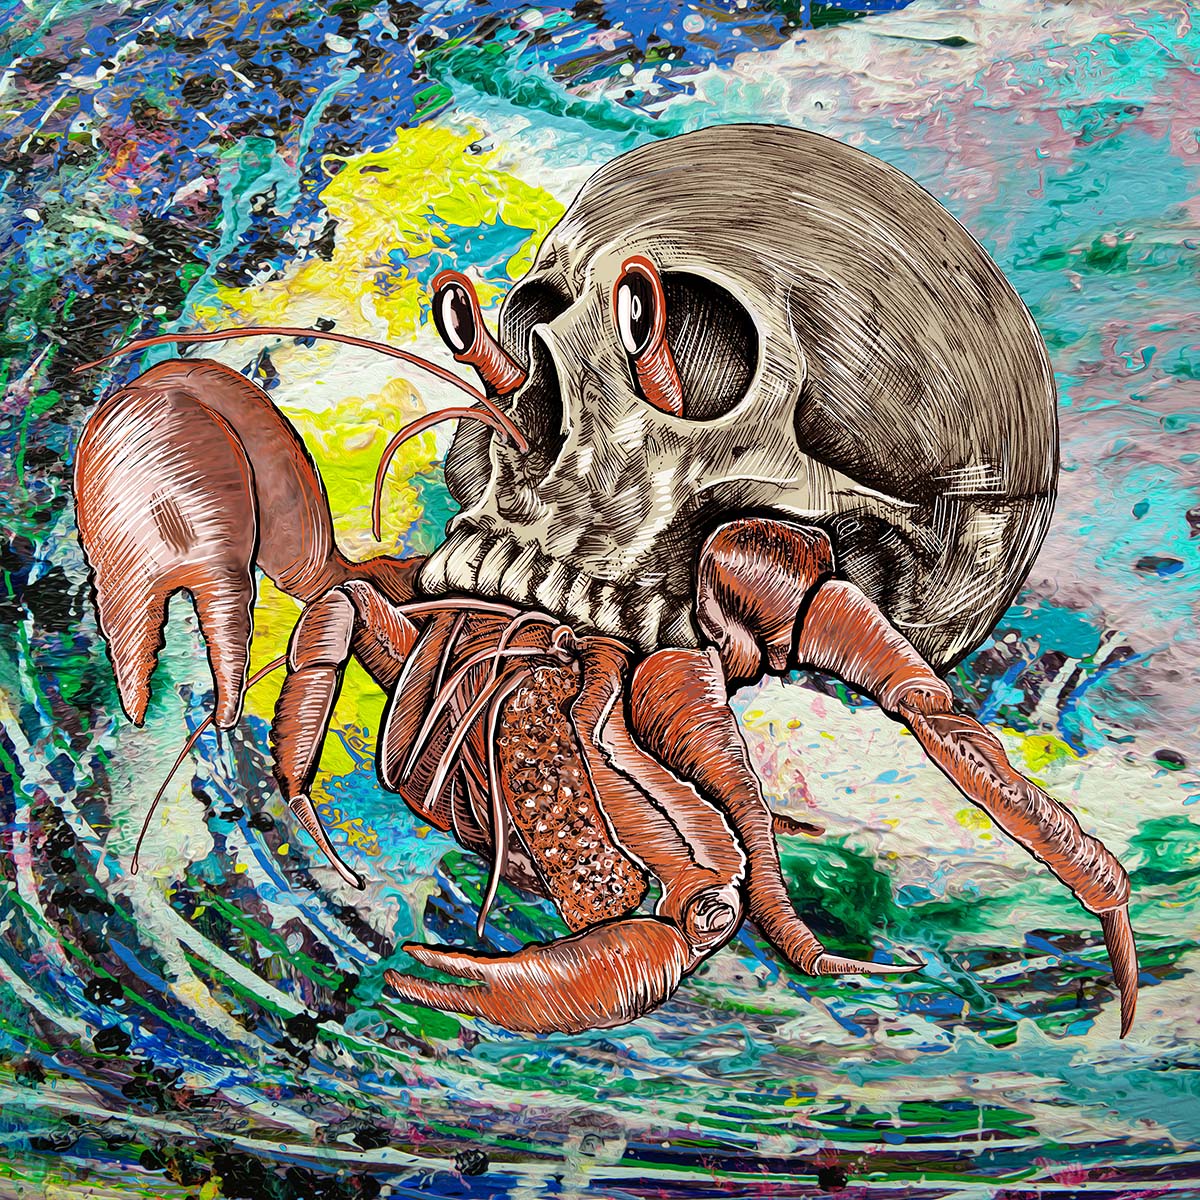 Skull Crab mixed media art by Doug LaRue